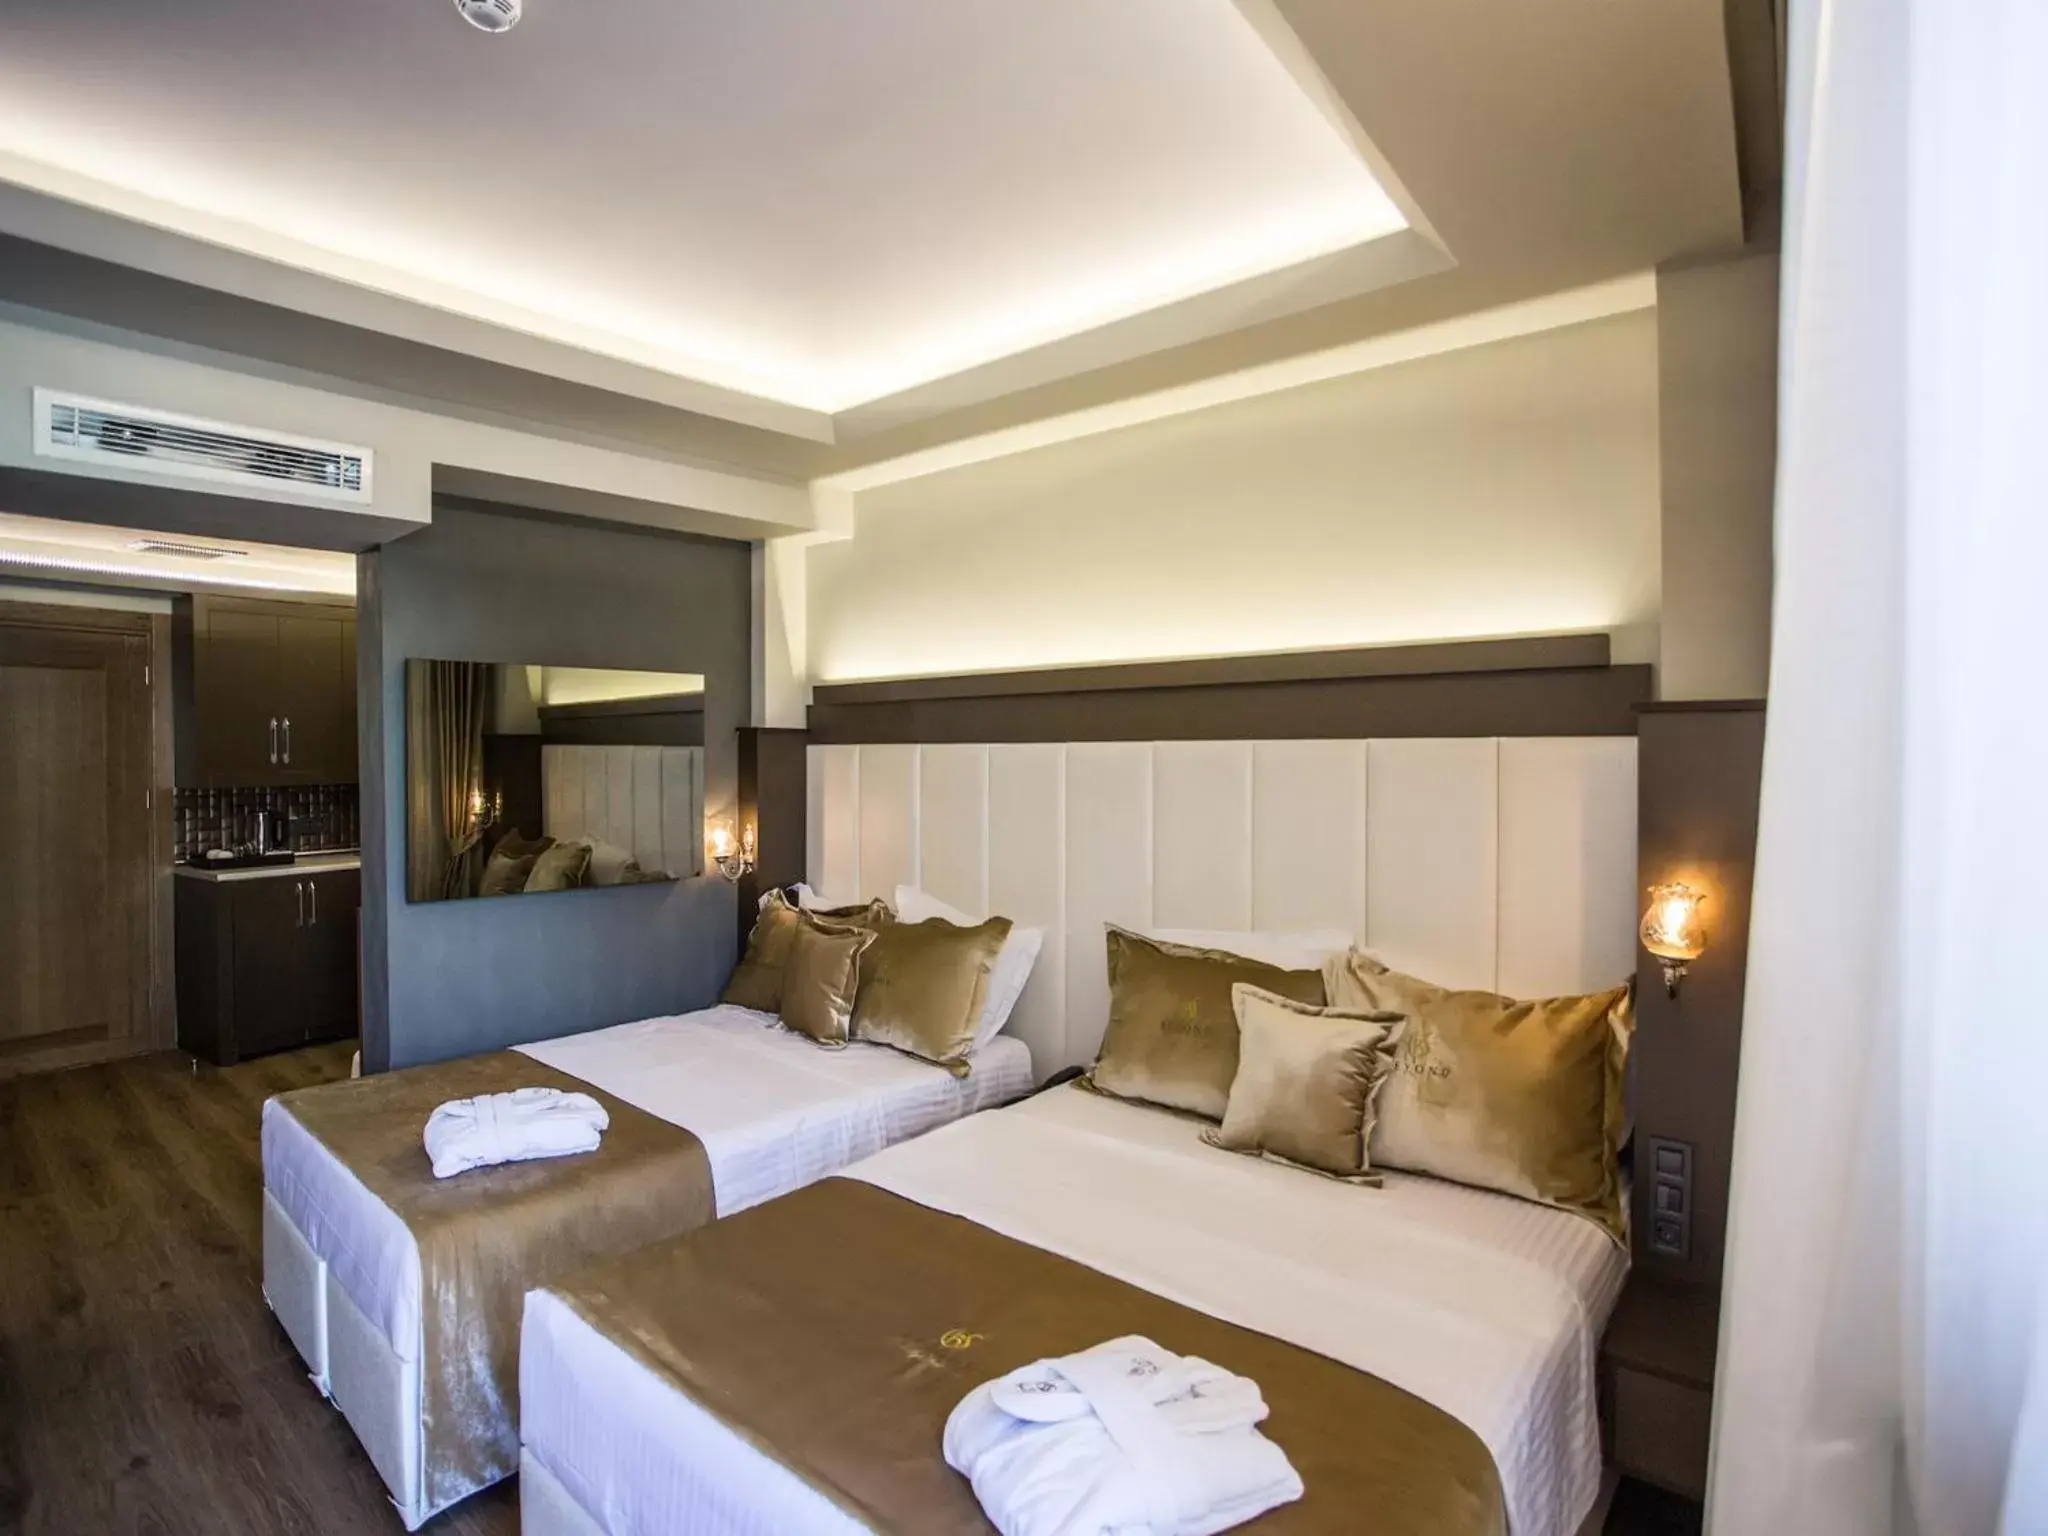 Bed, Room Photo in Bonne Sante Hotel